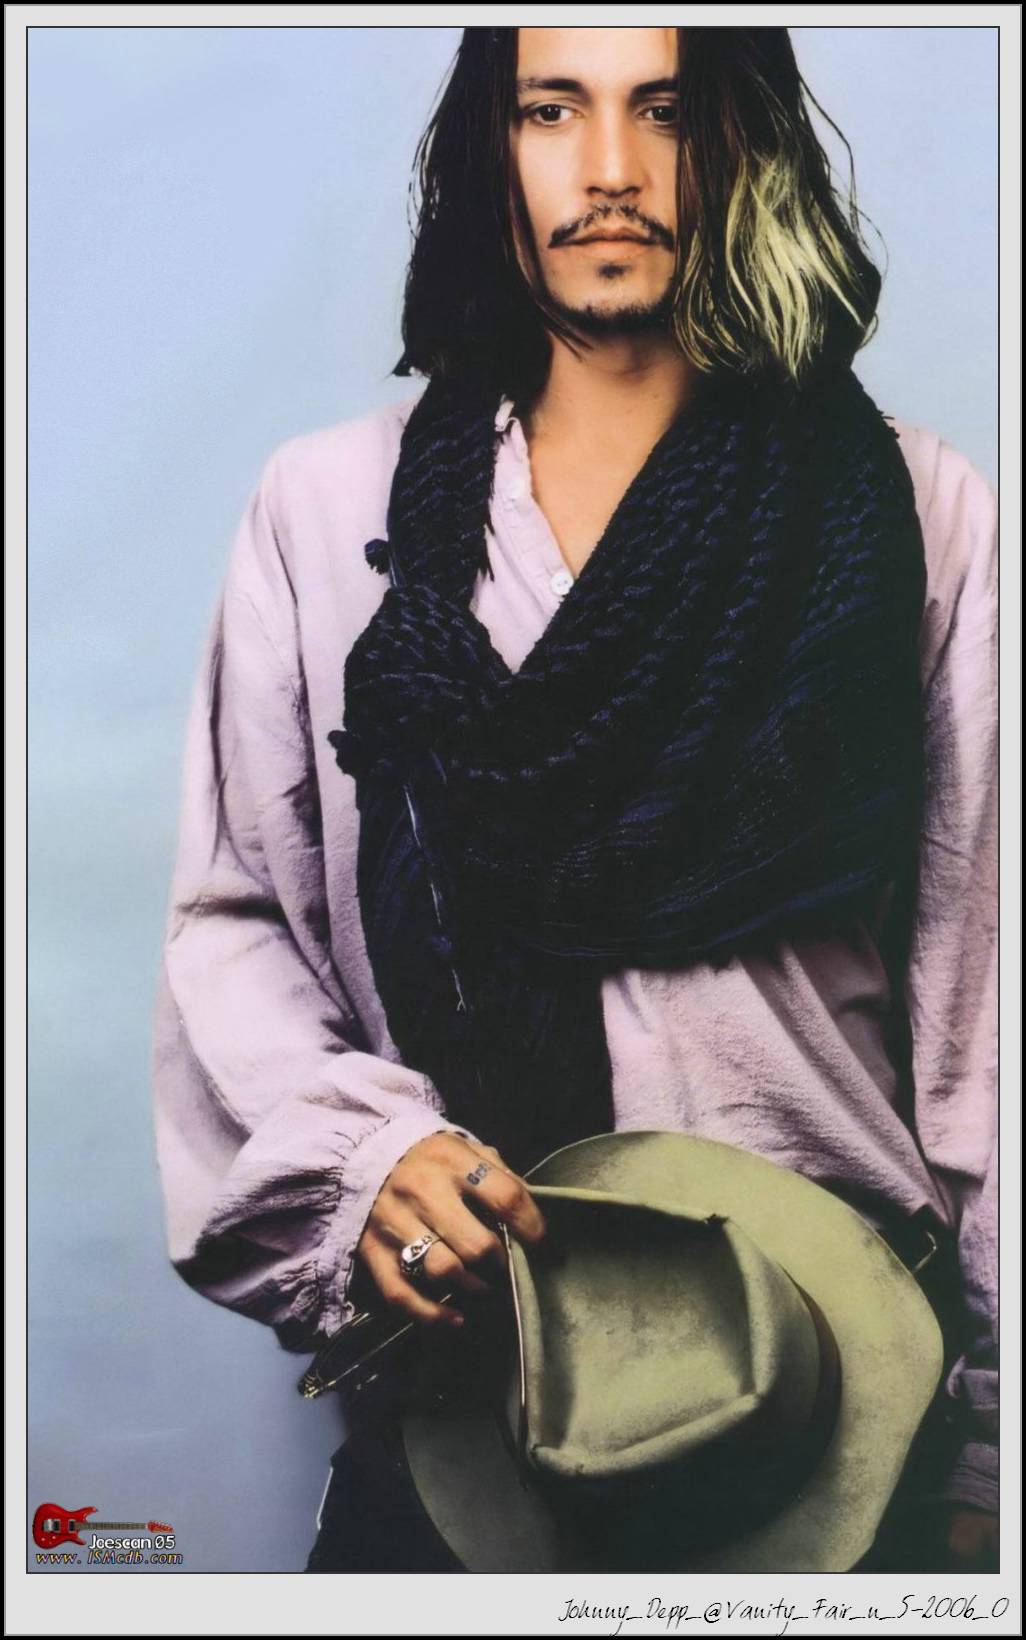 Johnny Depp photo 103 of 822 pics, wallpaper - photo #46247 - ThePlace21026 x 1640